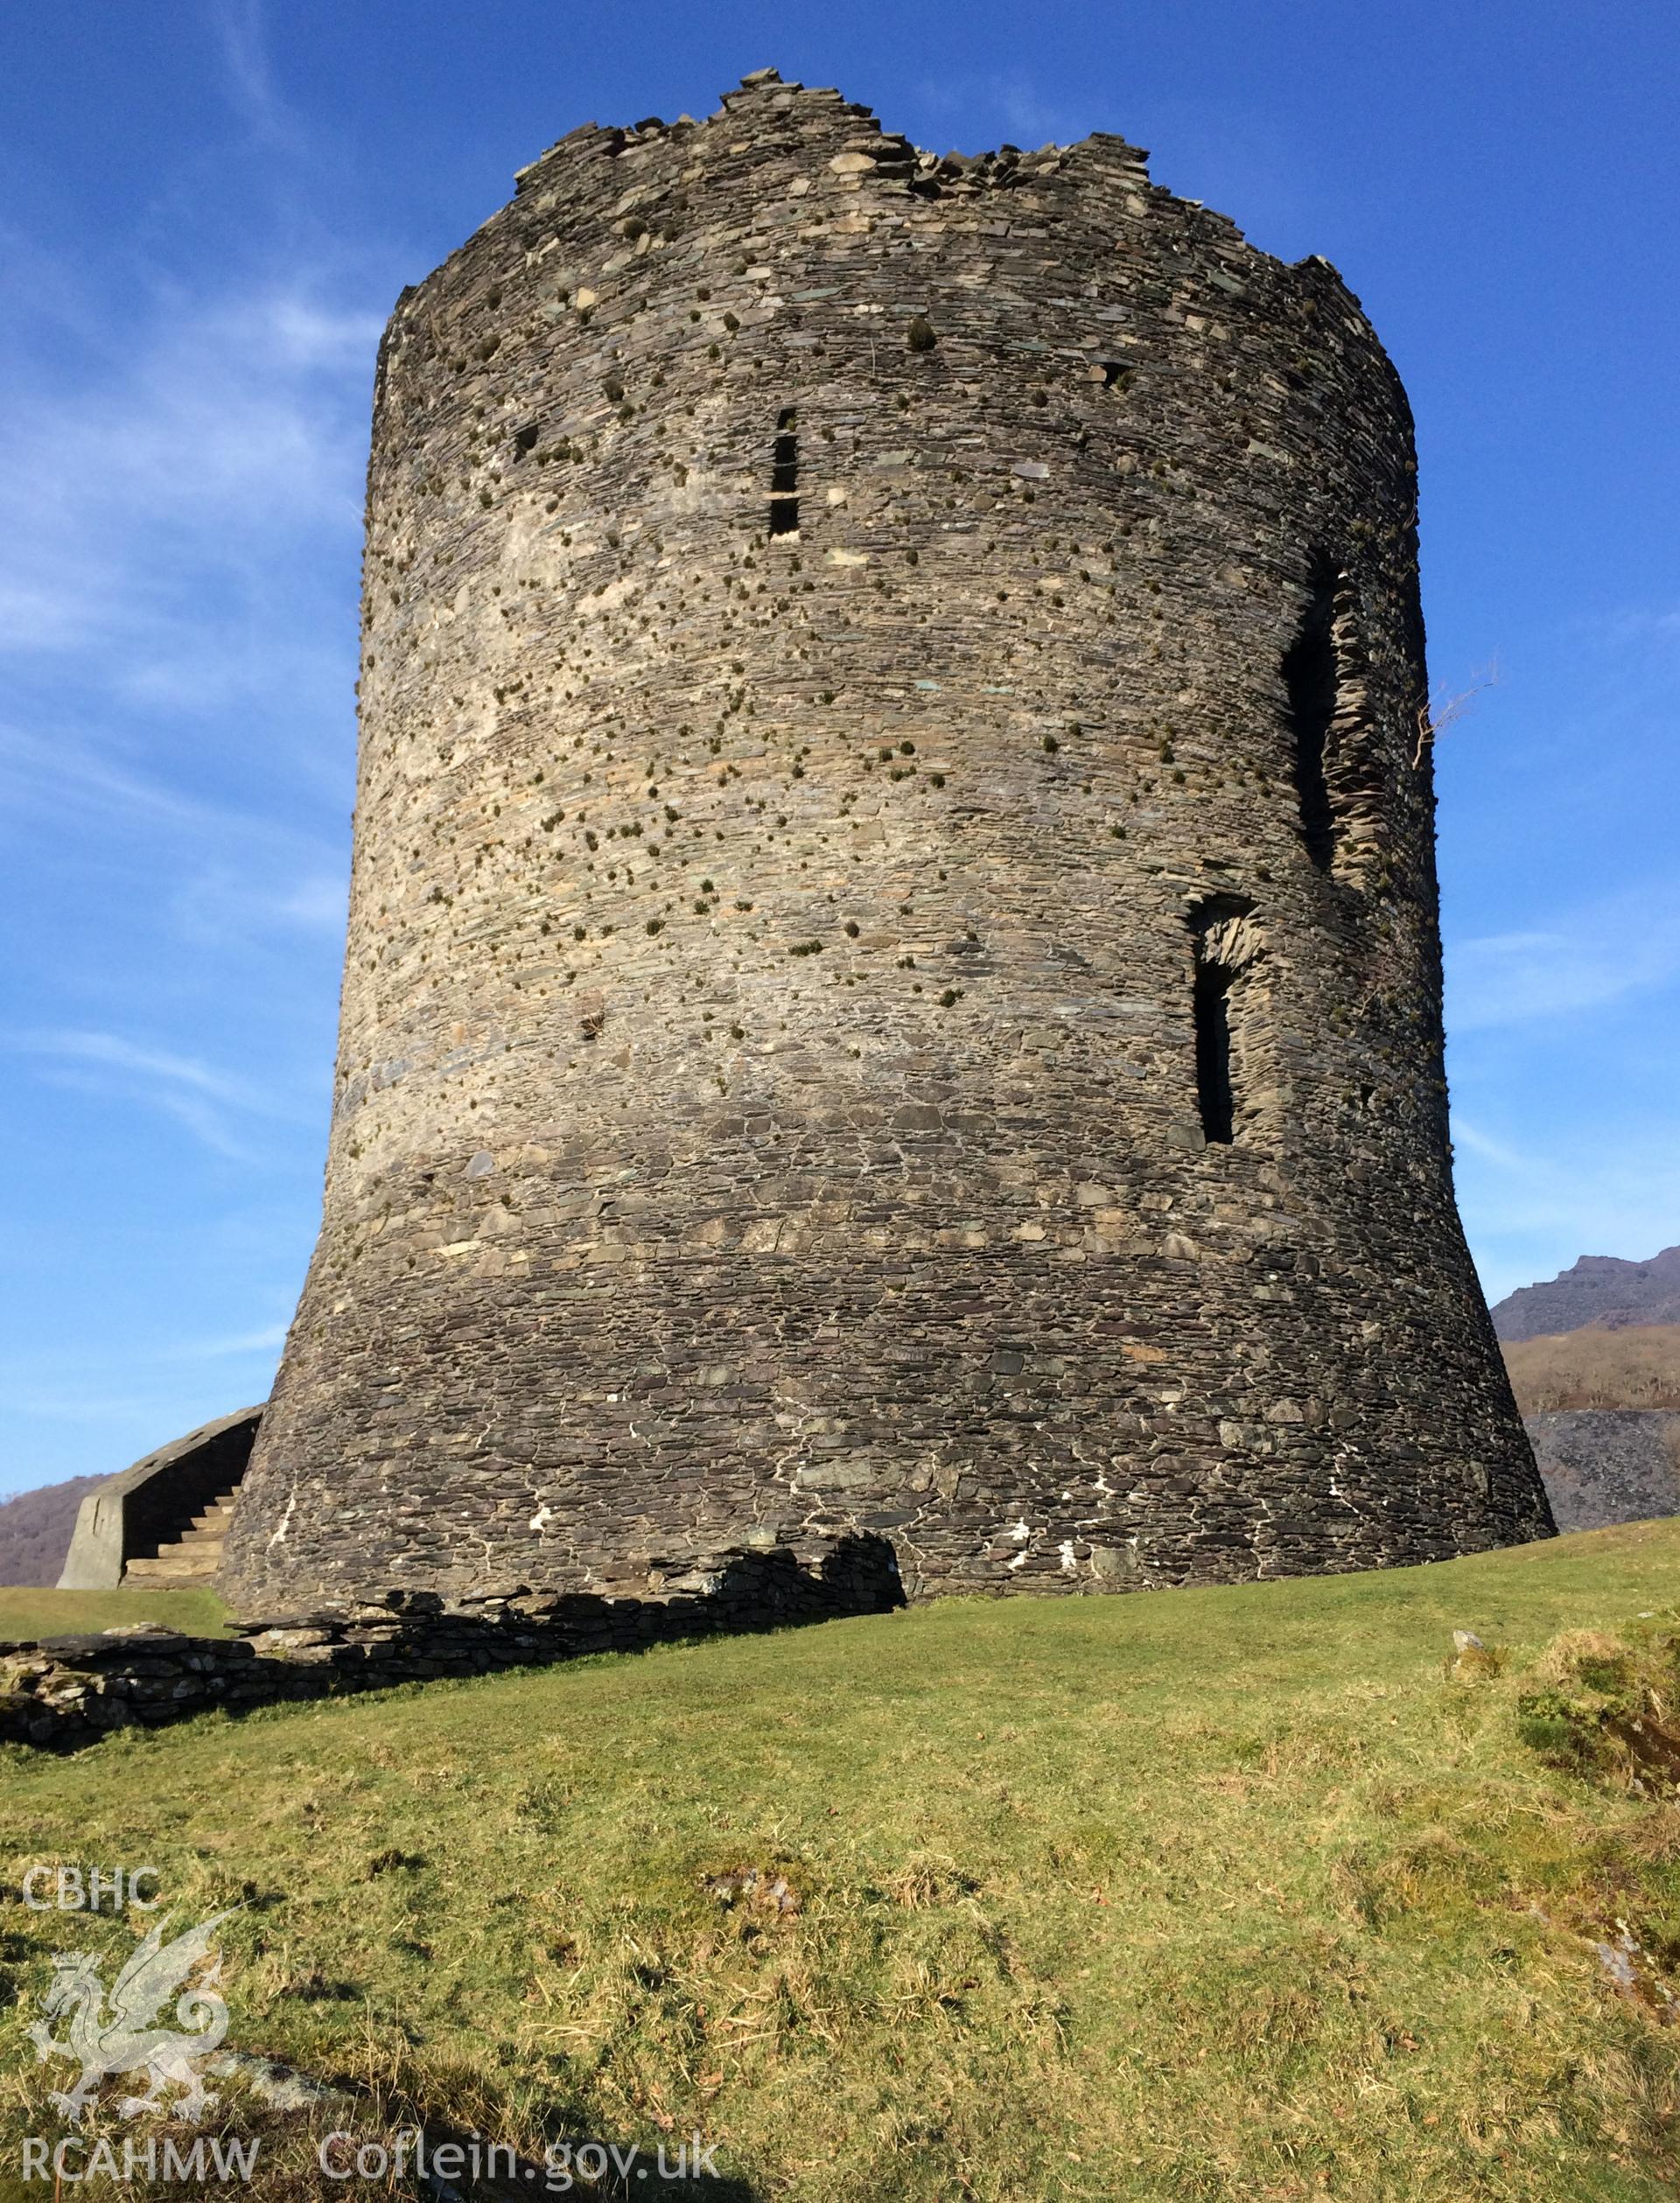 Photo showing view of Dolbadarn Castle, taken by Paul R. Davis, 28th February 2018.